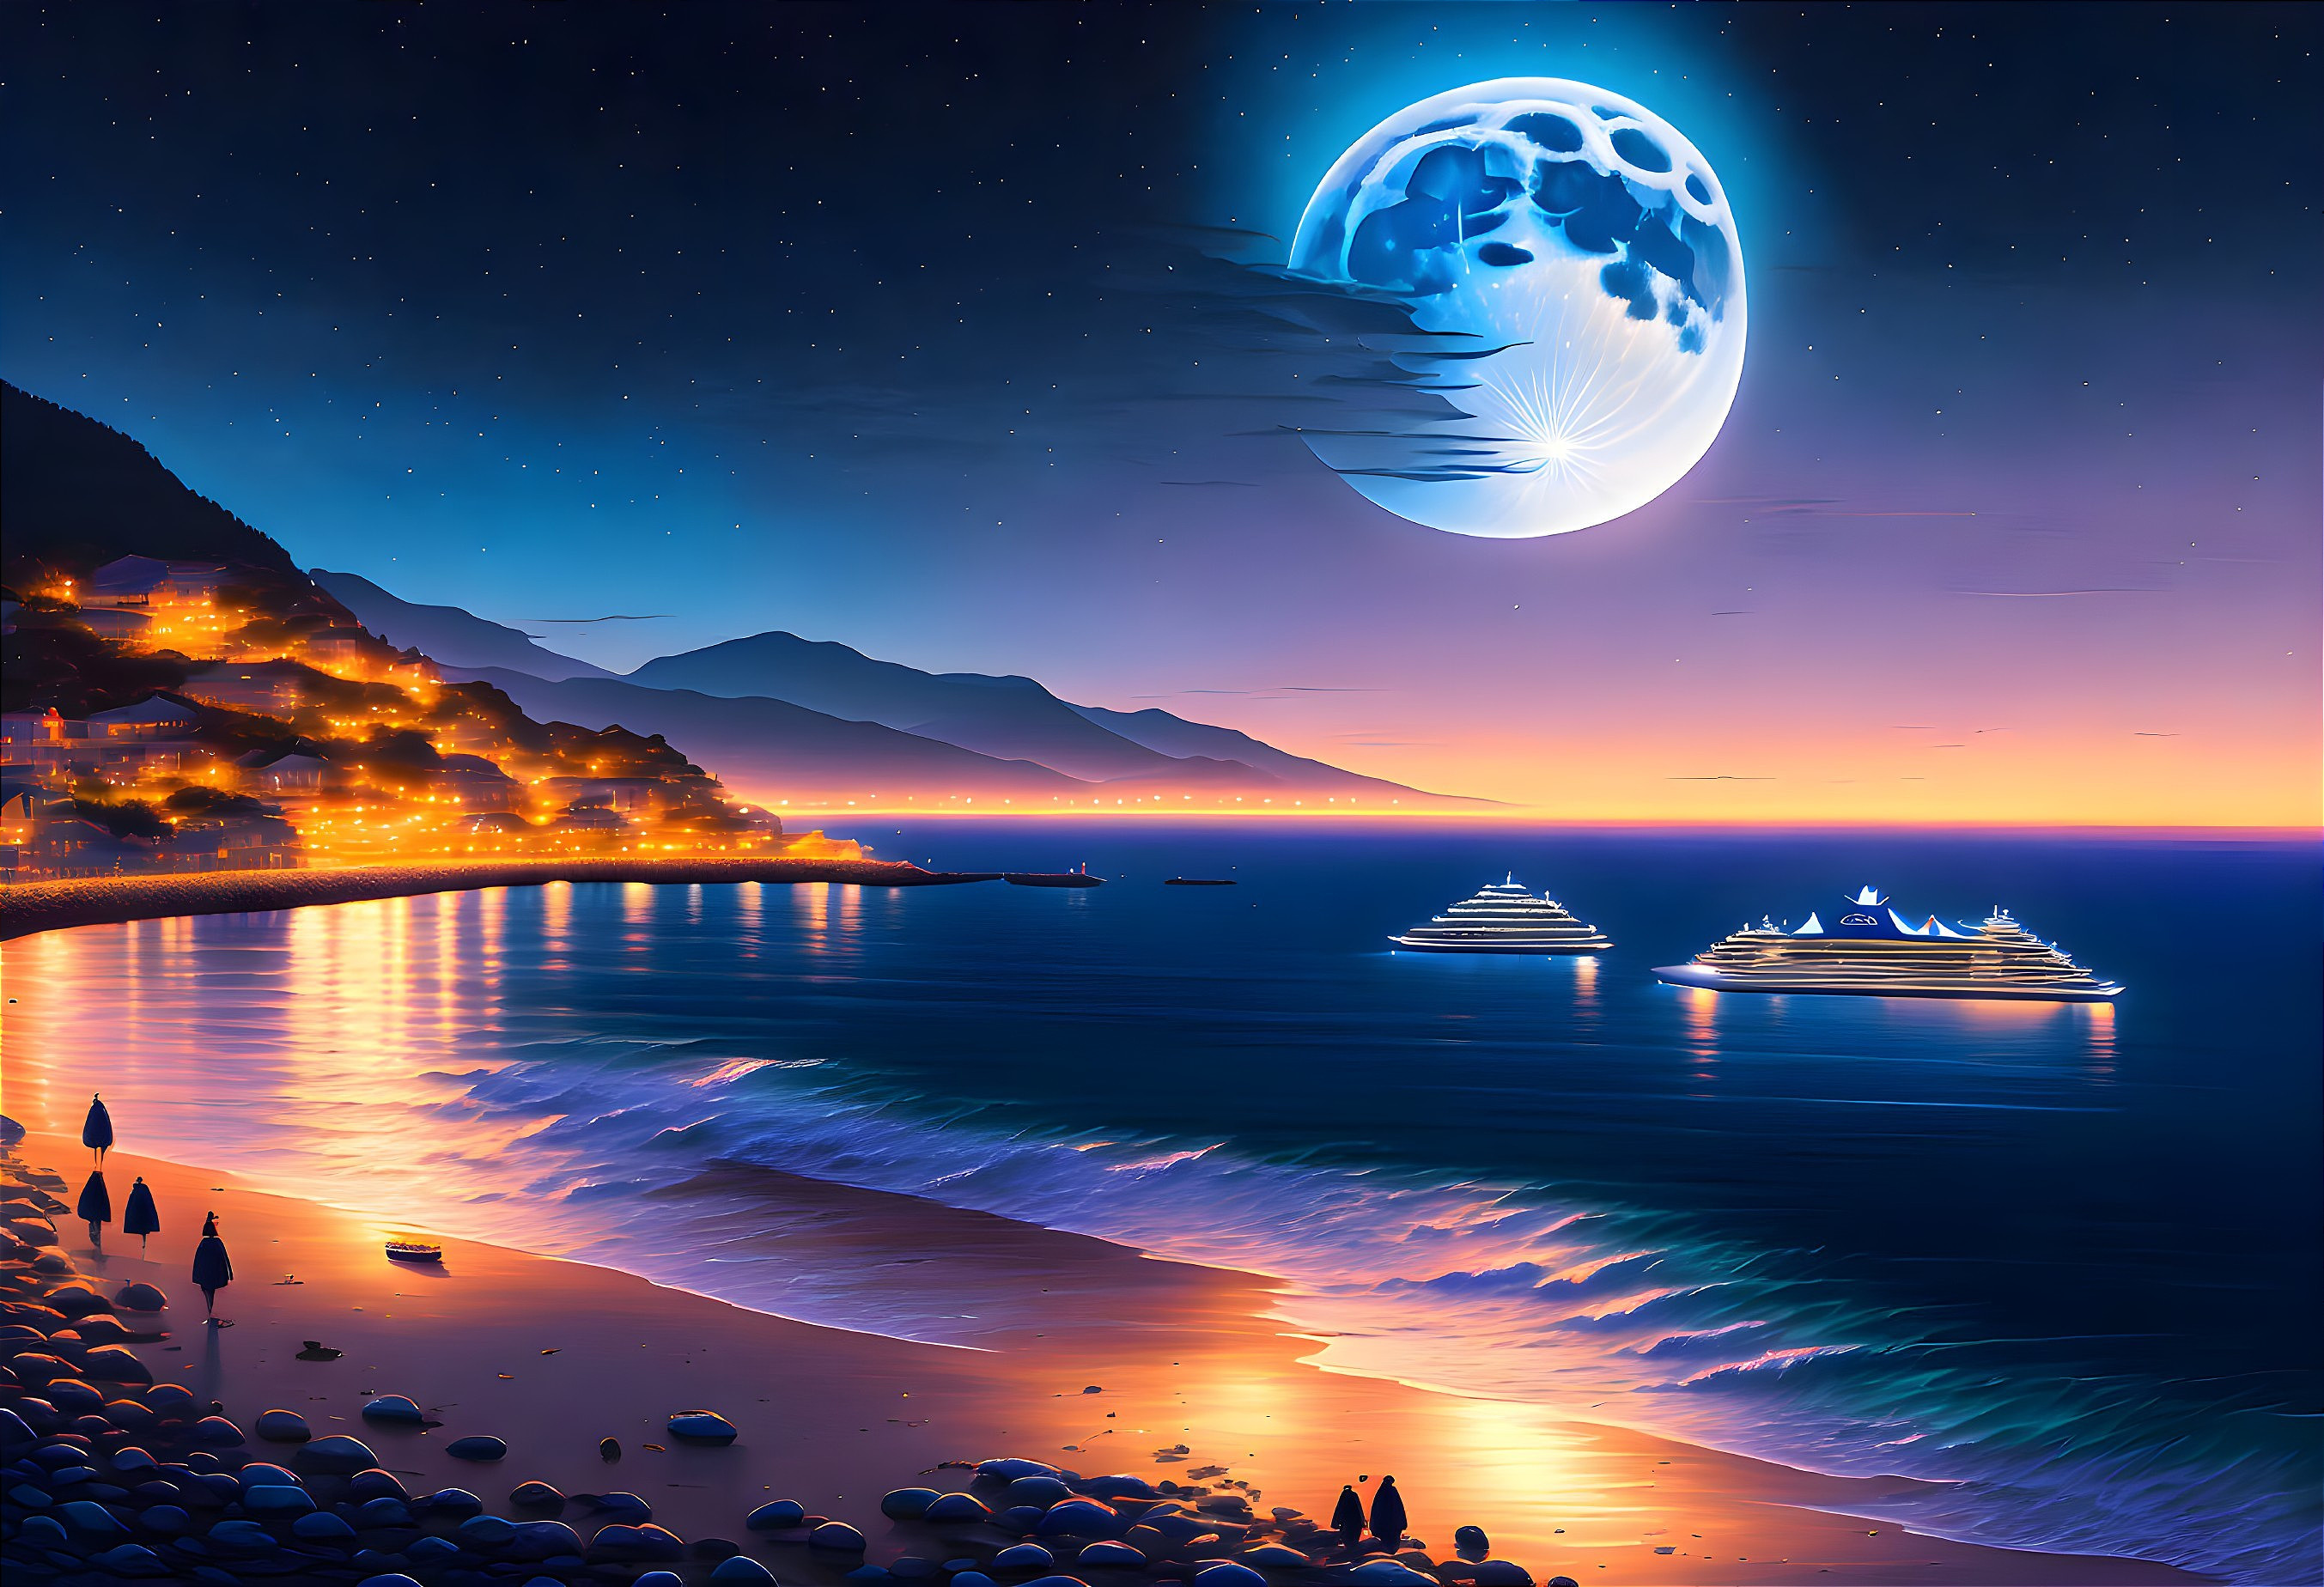 Seaside town illuminated by giant azure moon